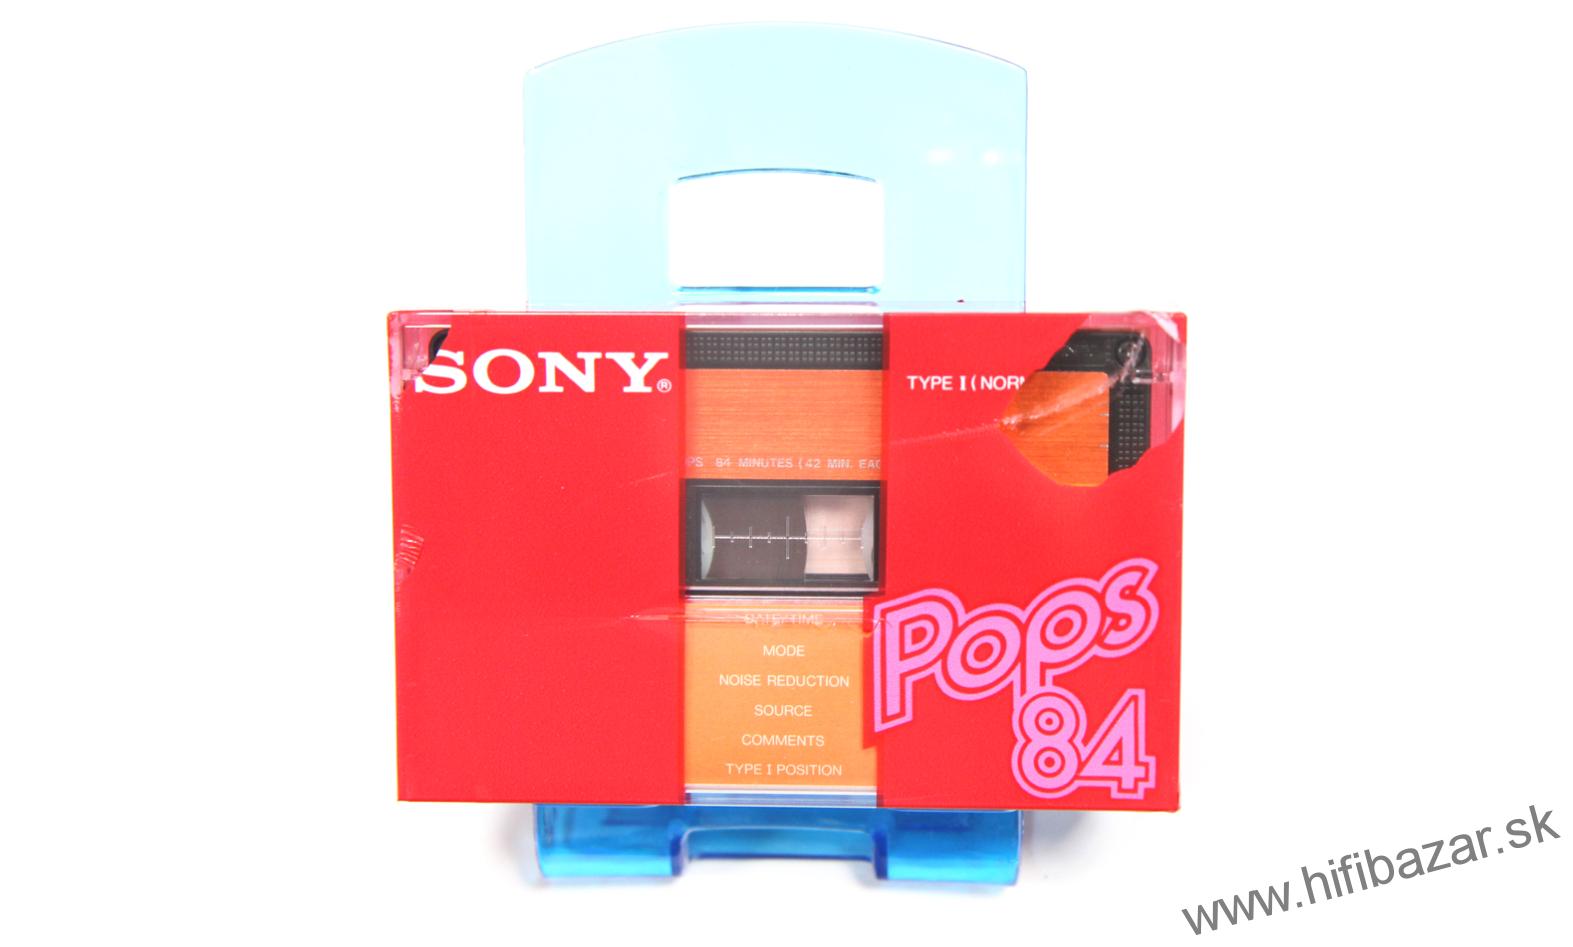 SONY POPS-84 Japan